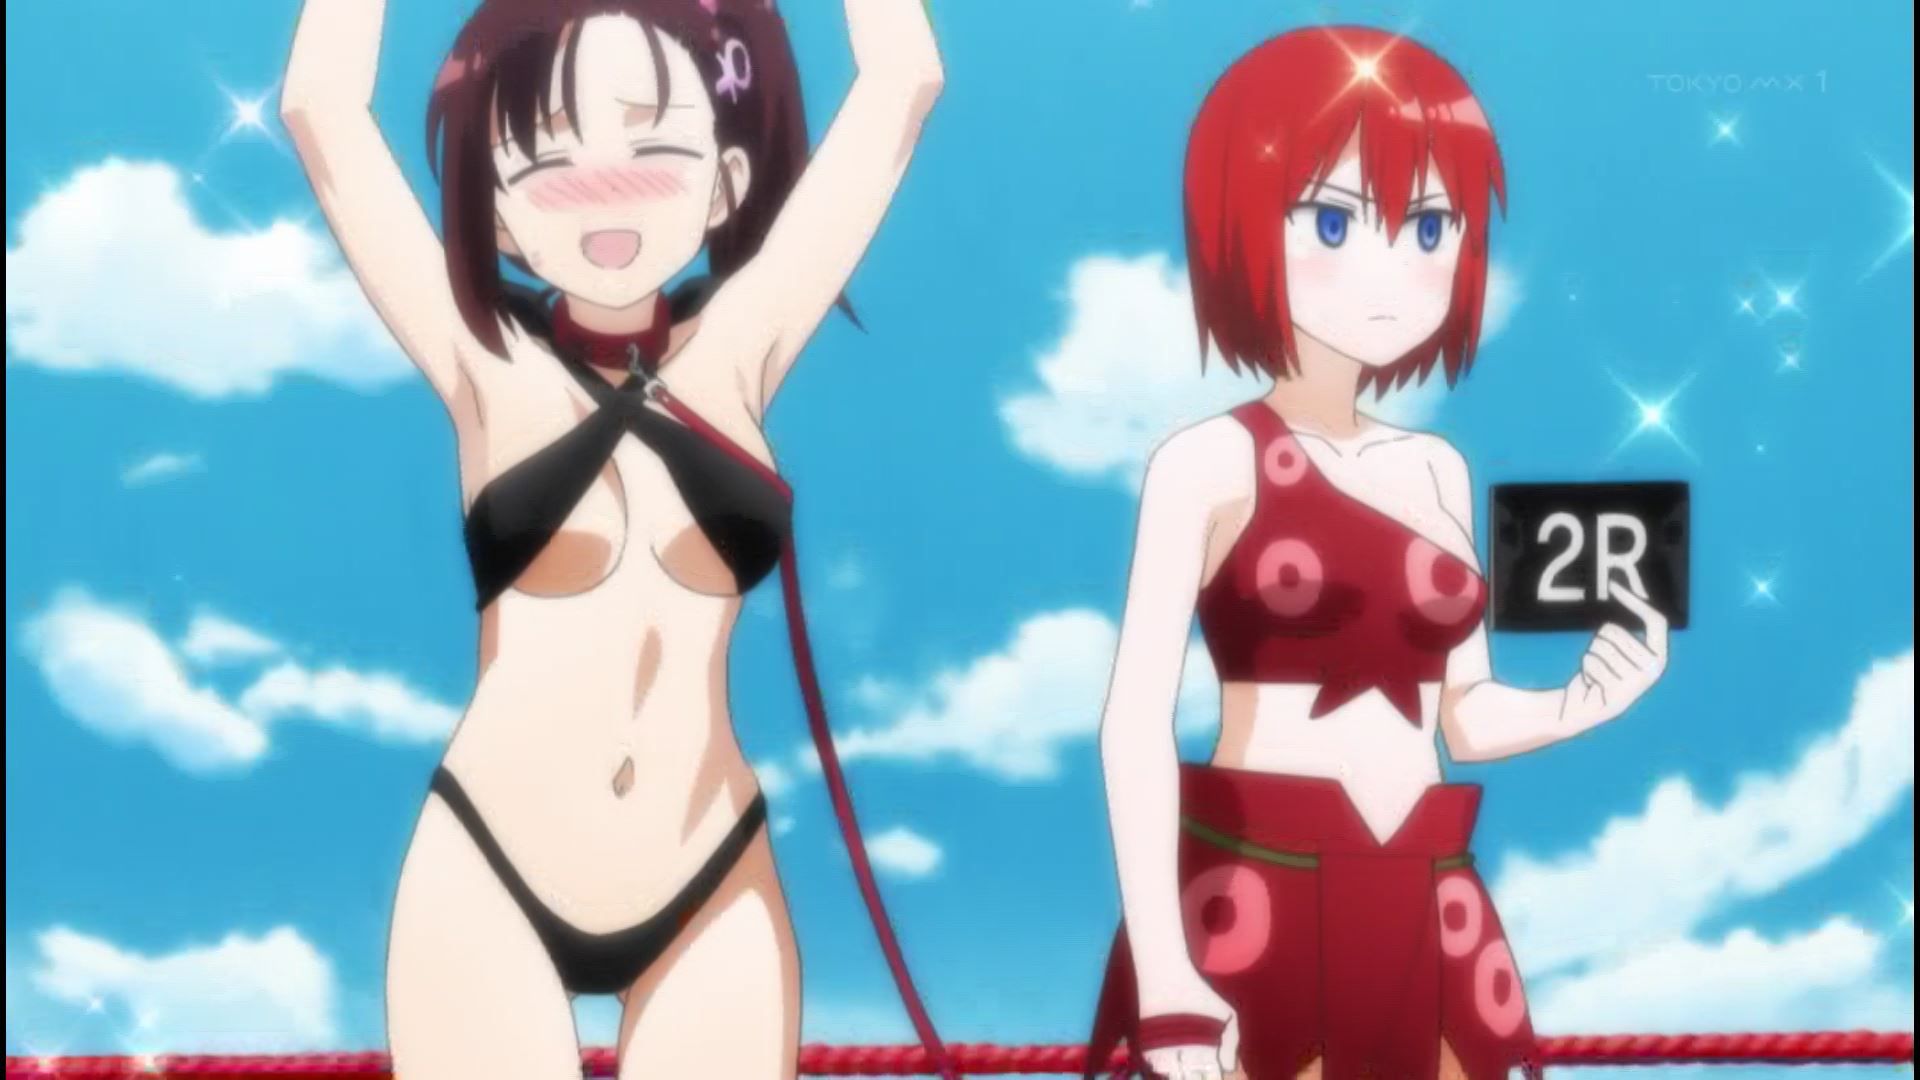 Anime [Shimarenuse] Seaton Gakuen] scene that girls become insanely erotic costumes in episode 12 6